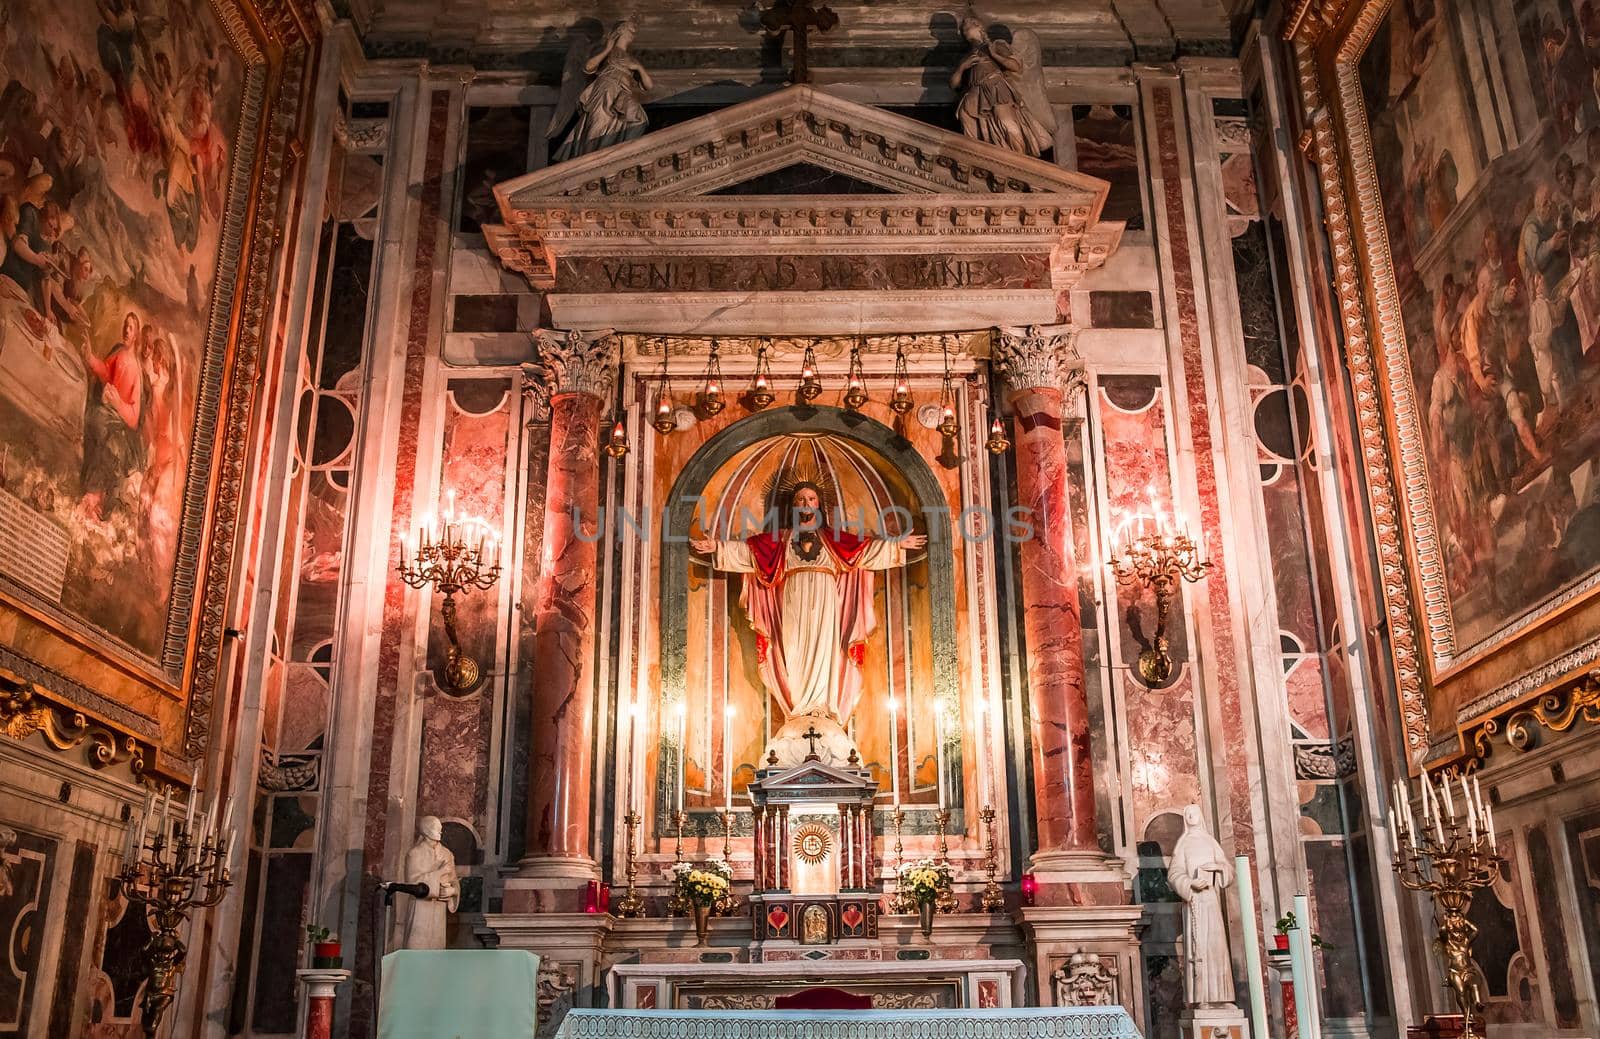 Barroco church of the Gesu Nuovo, Naples, Italy by photogolfer